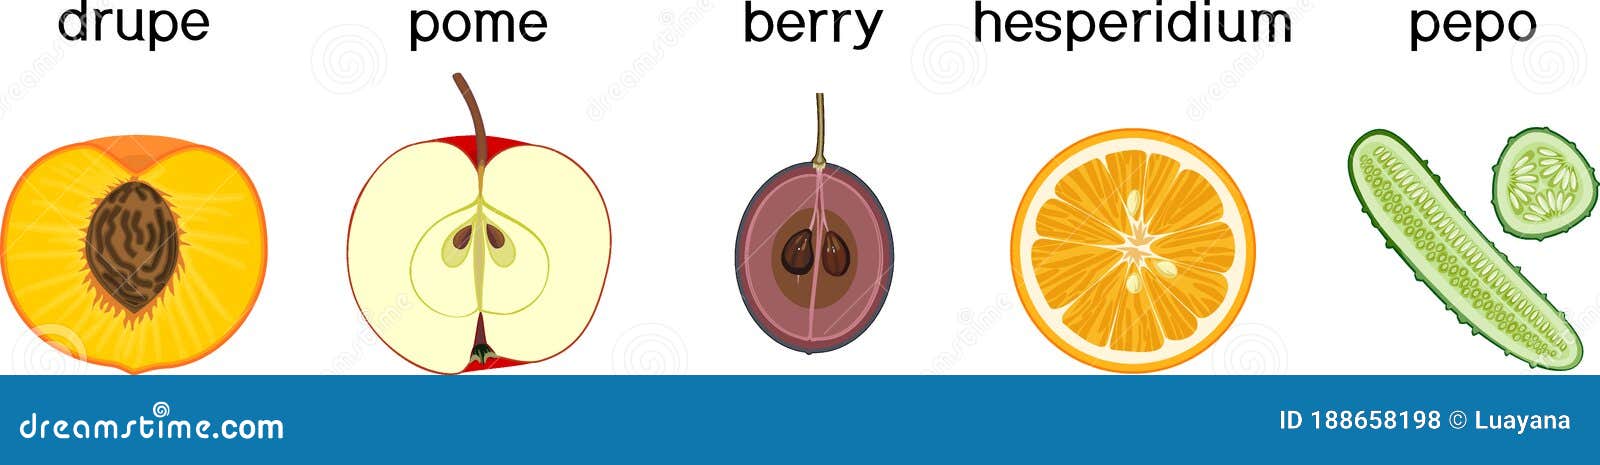 Diferentes Tipos De Frutas Drupe Pome Berry Hesperidium Y Pepo